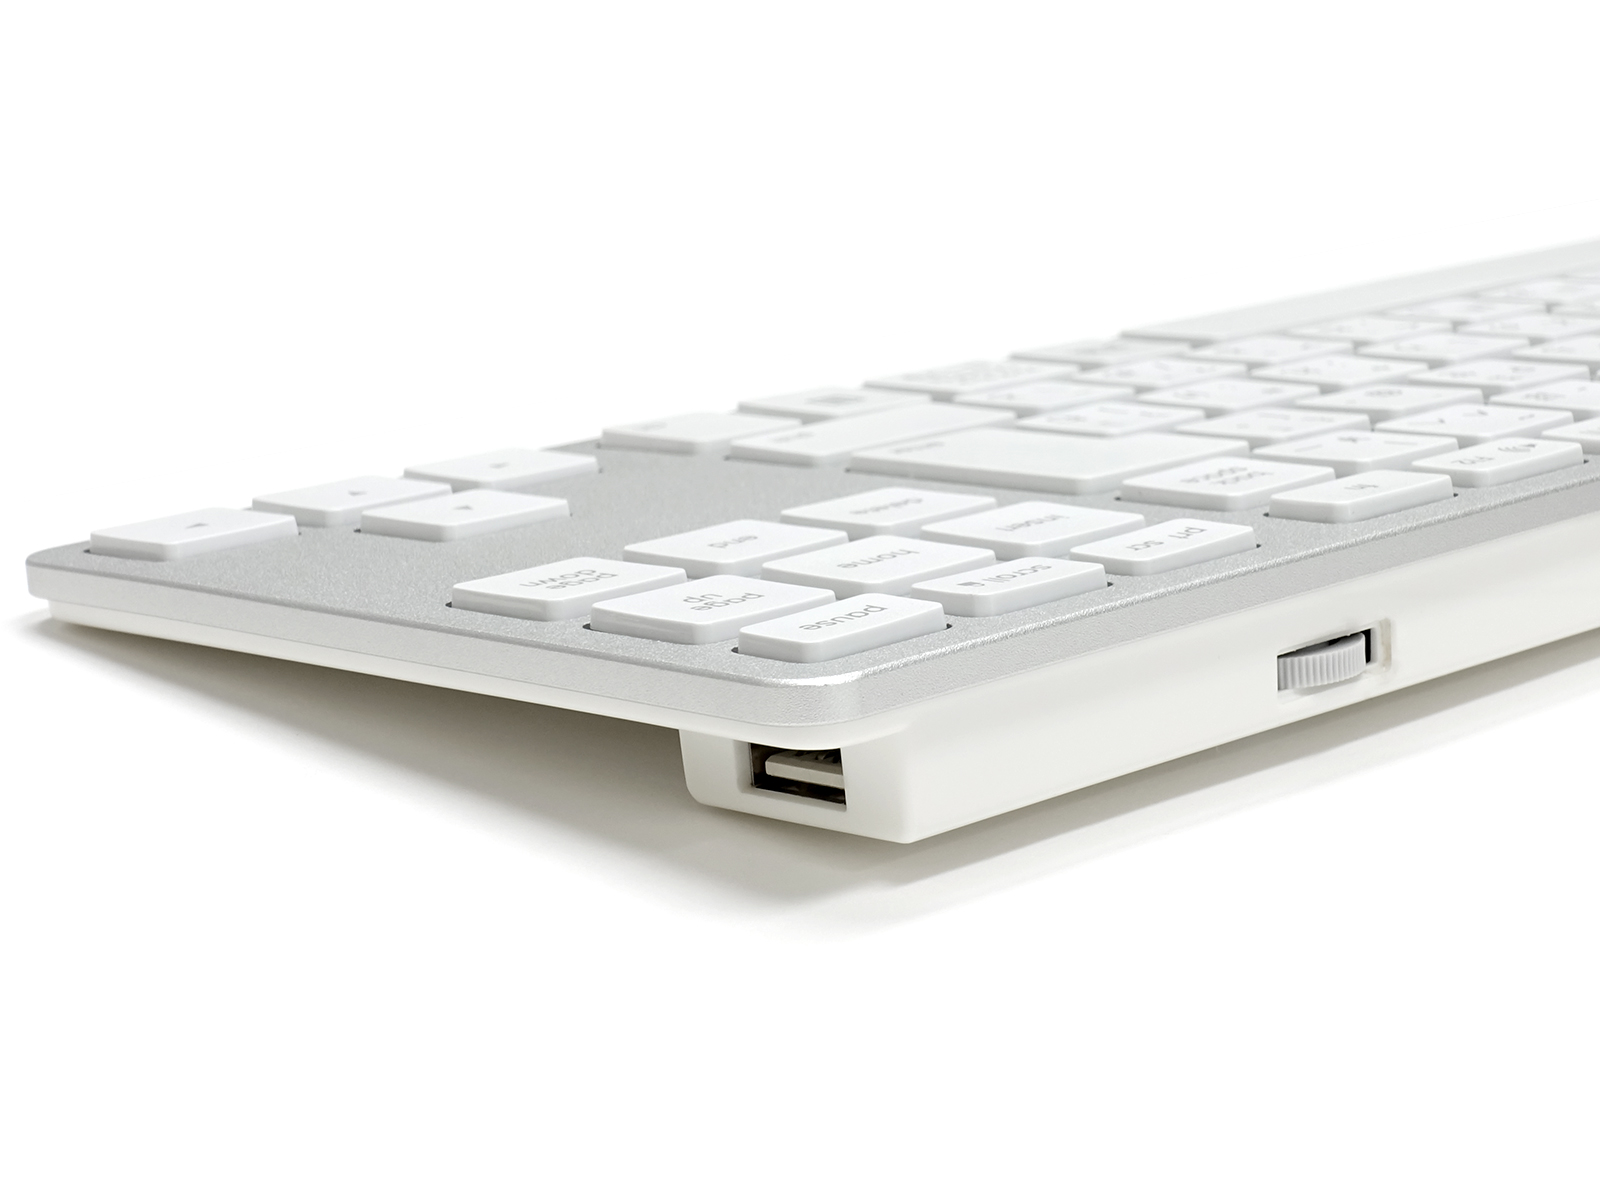 Matias Wired Aluminum Tenkeyless keyboard for PC - Silver 日本語配列製品情報 |  ダイヤテック株式会社